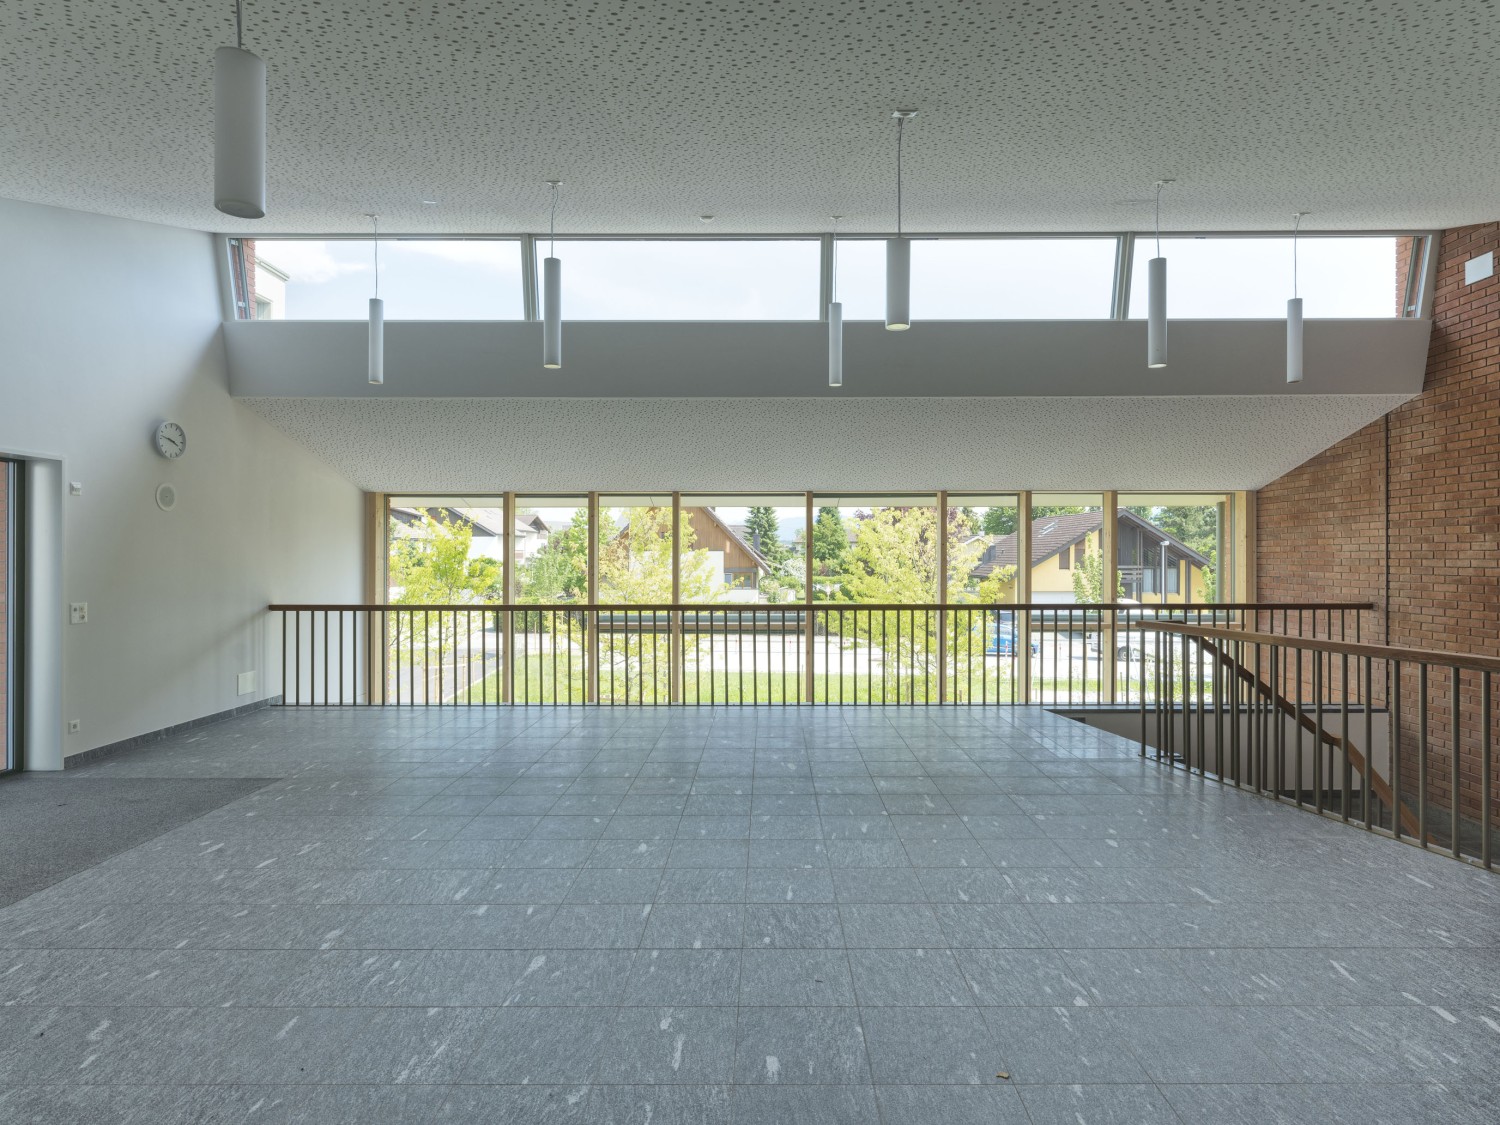 HUMMBURKART ARCHITEKTEN: Neubau Sekundarschule in Obfelden